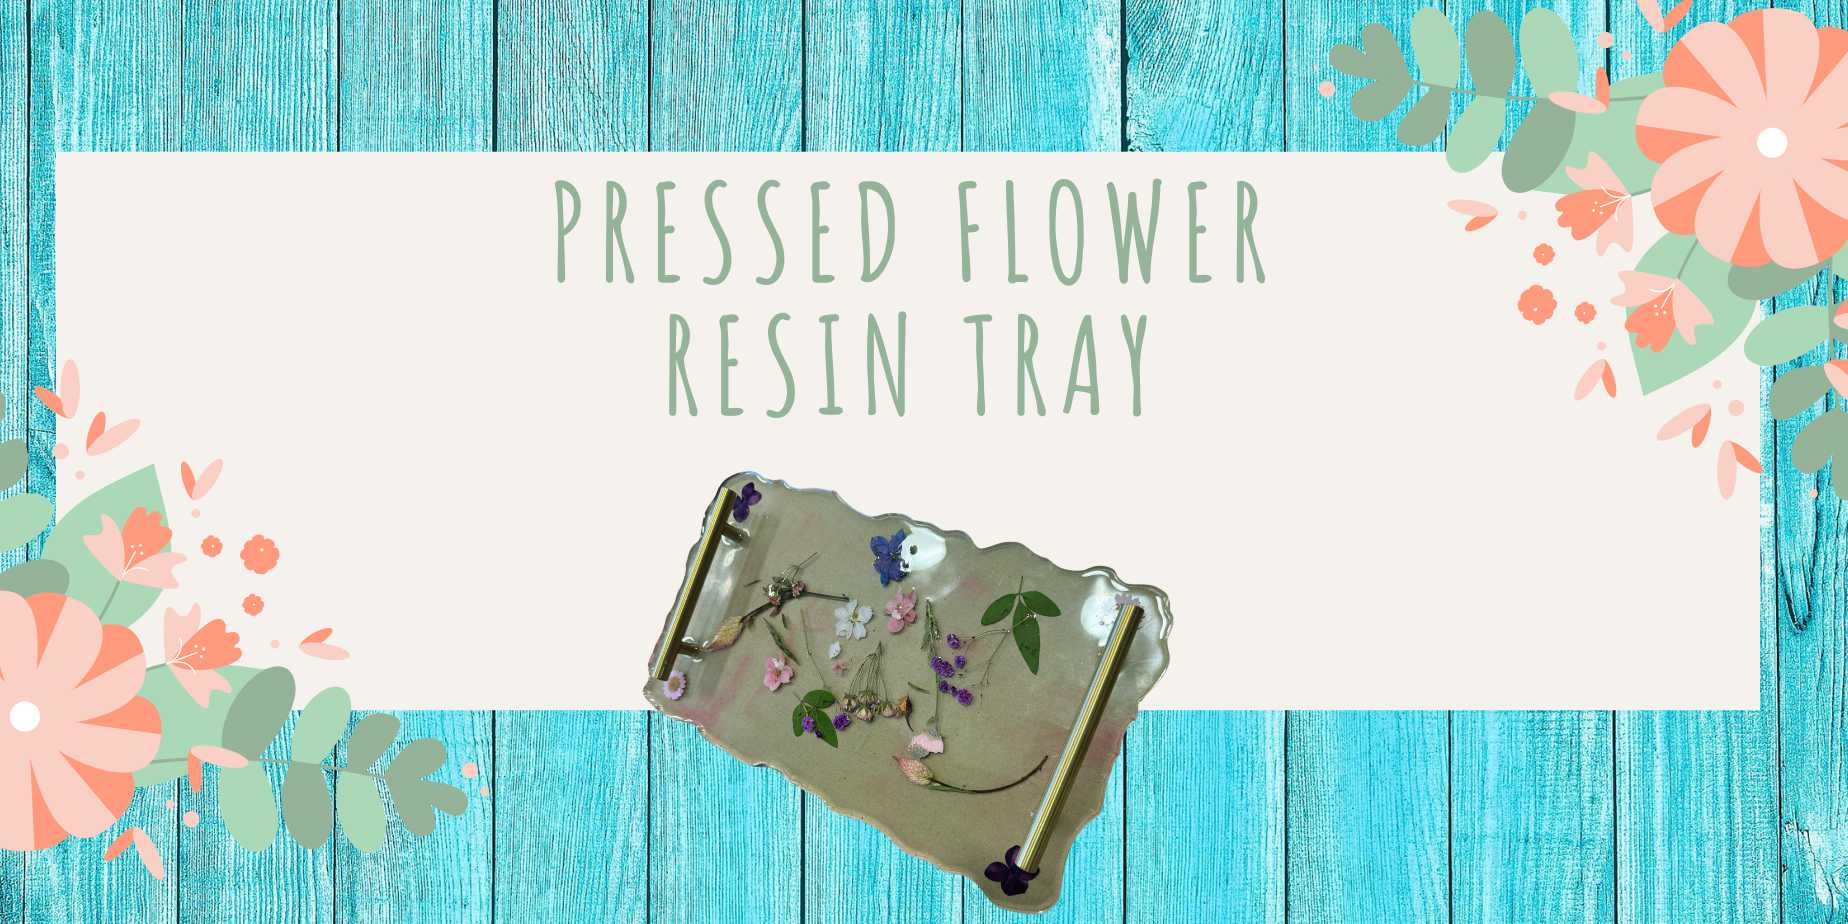 Pressed Flower Resin Tray